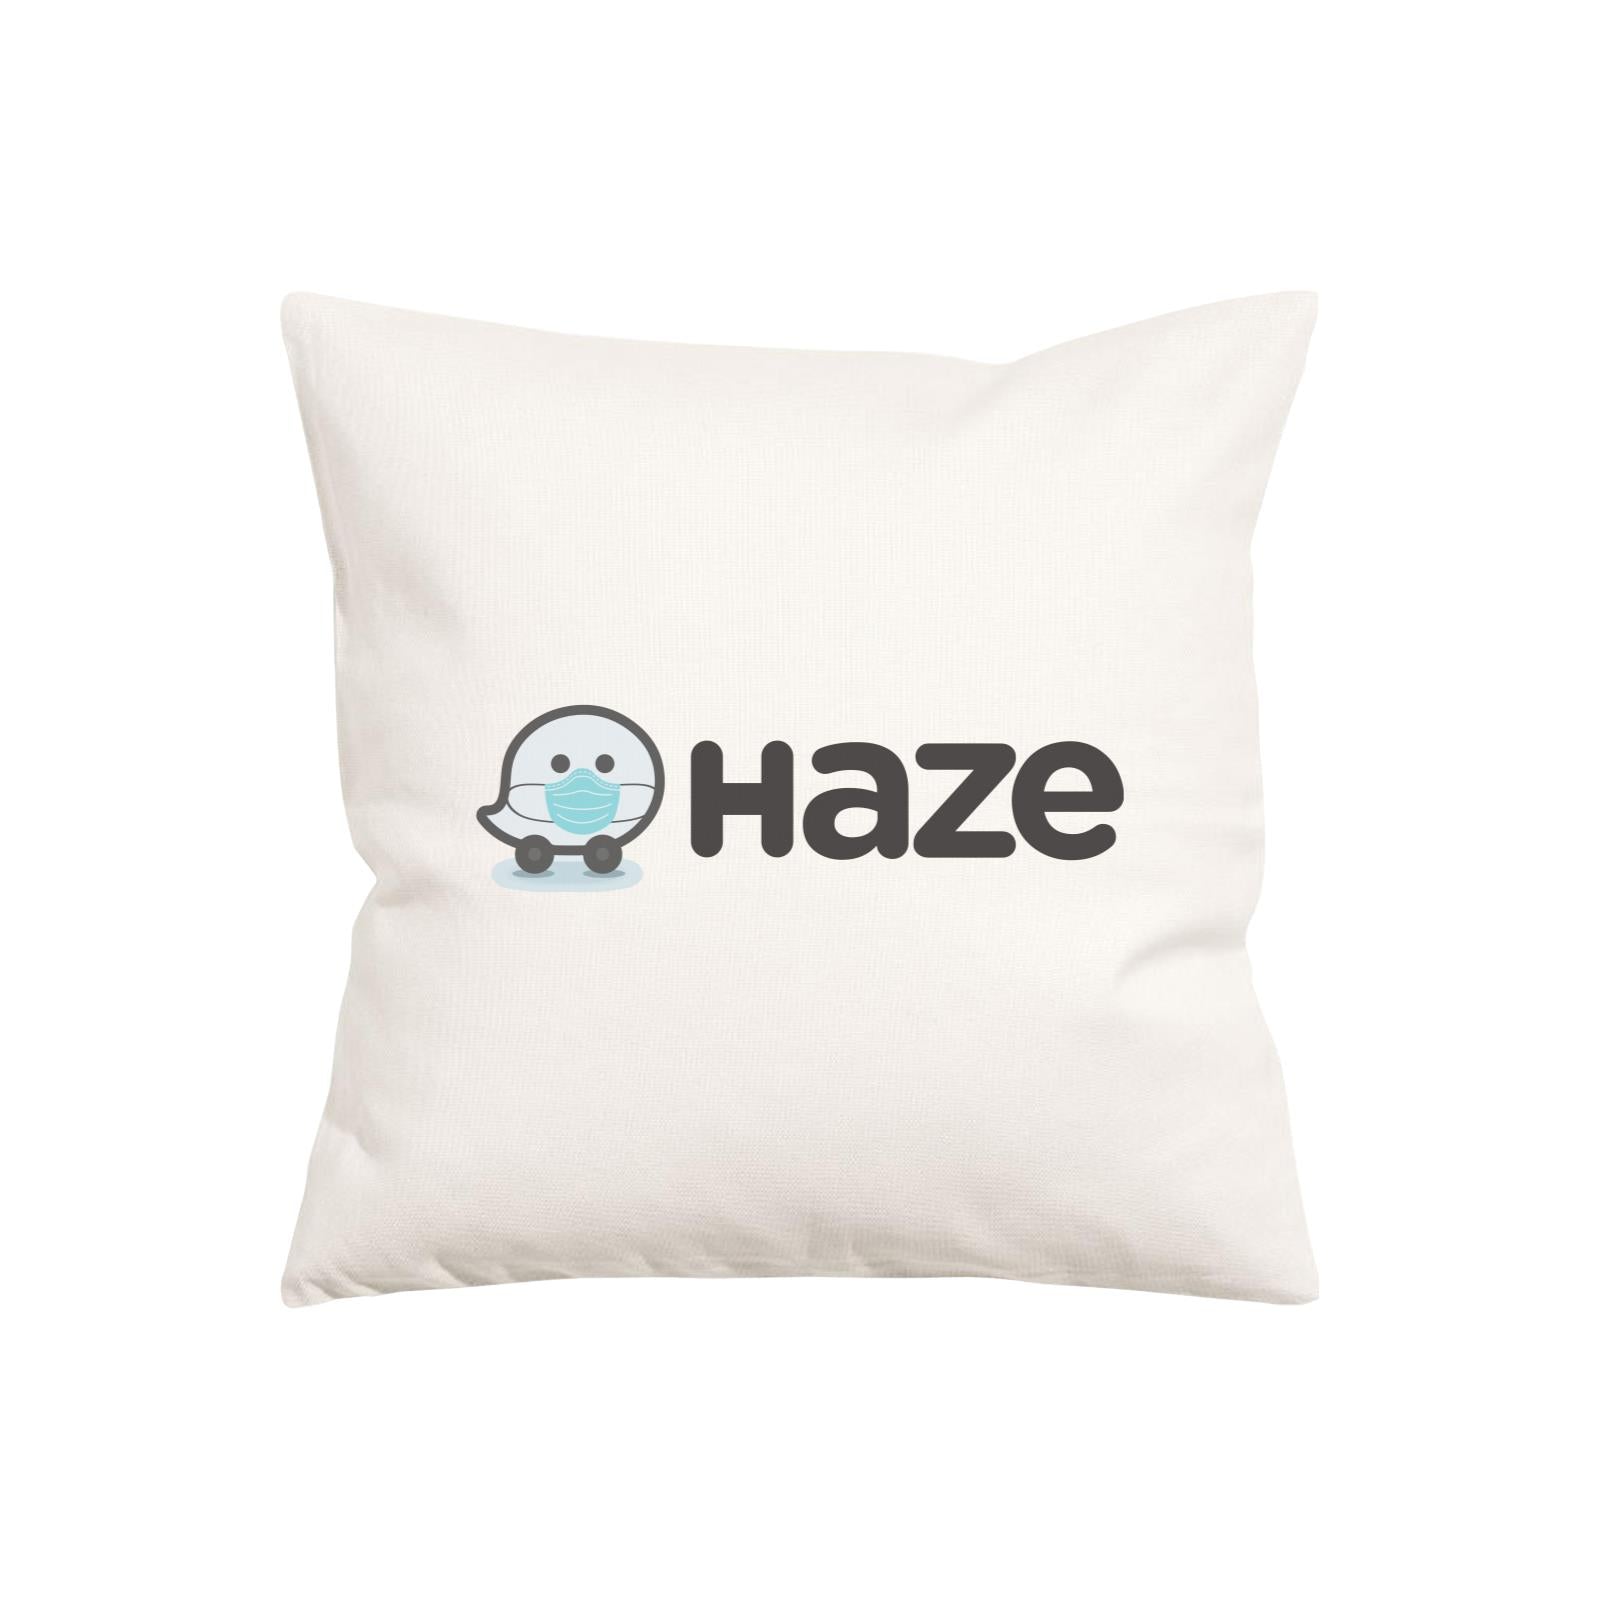 Slang Statement Haze Pillow Cushion